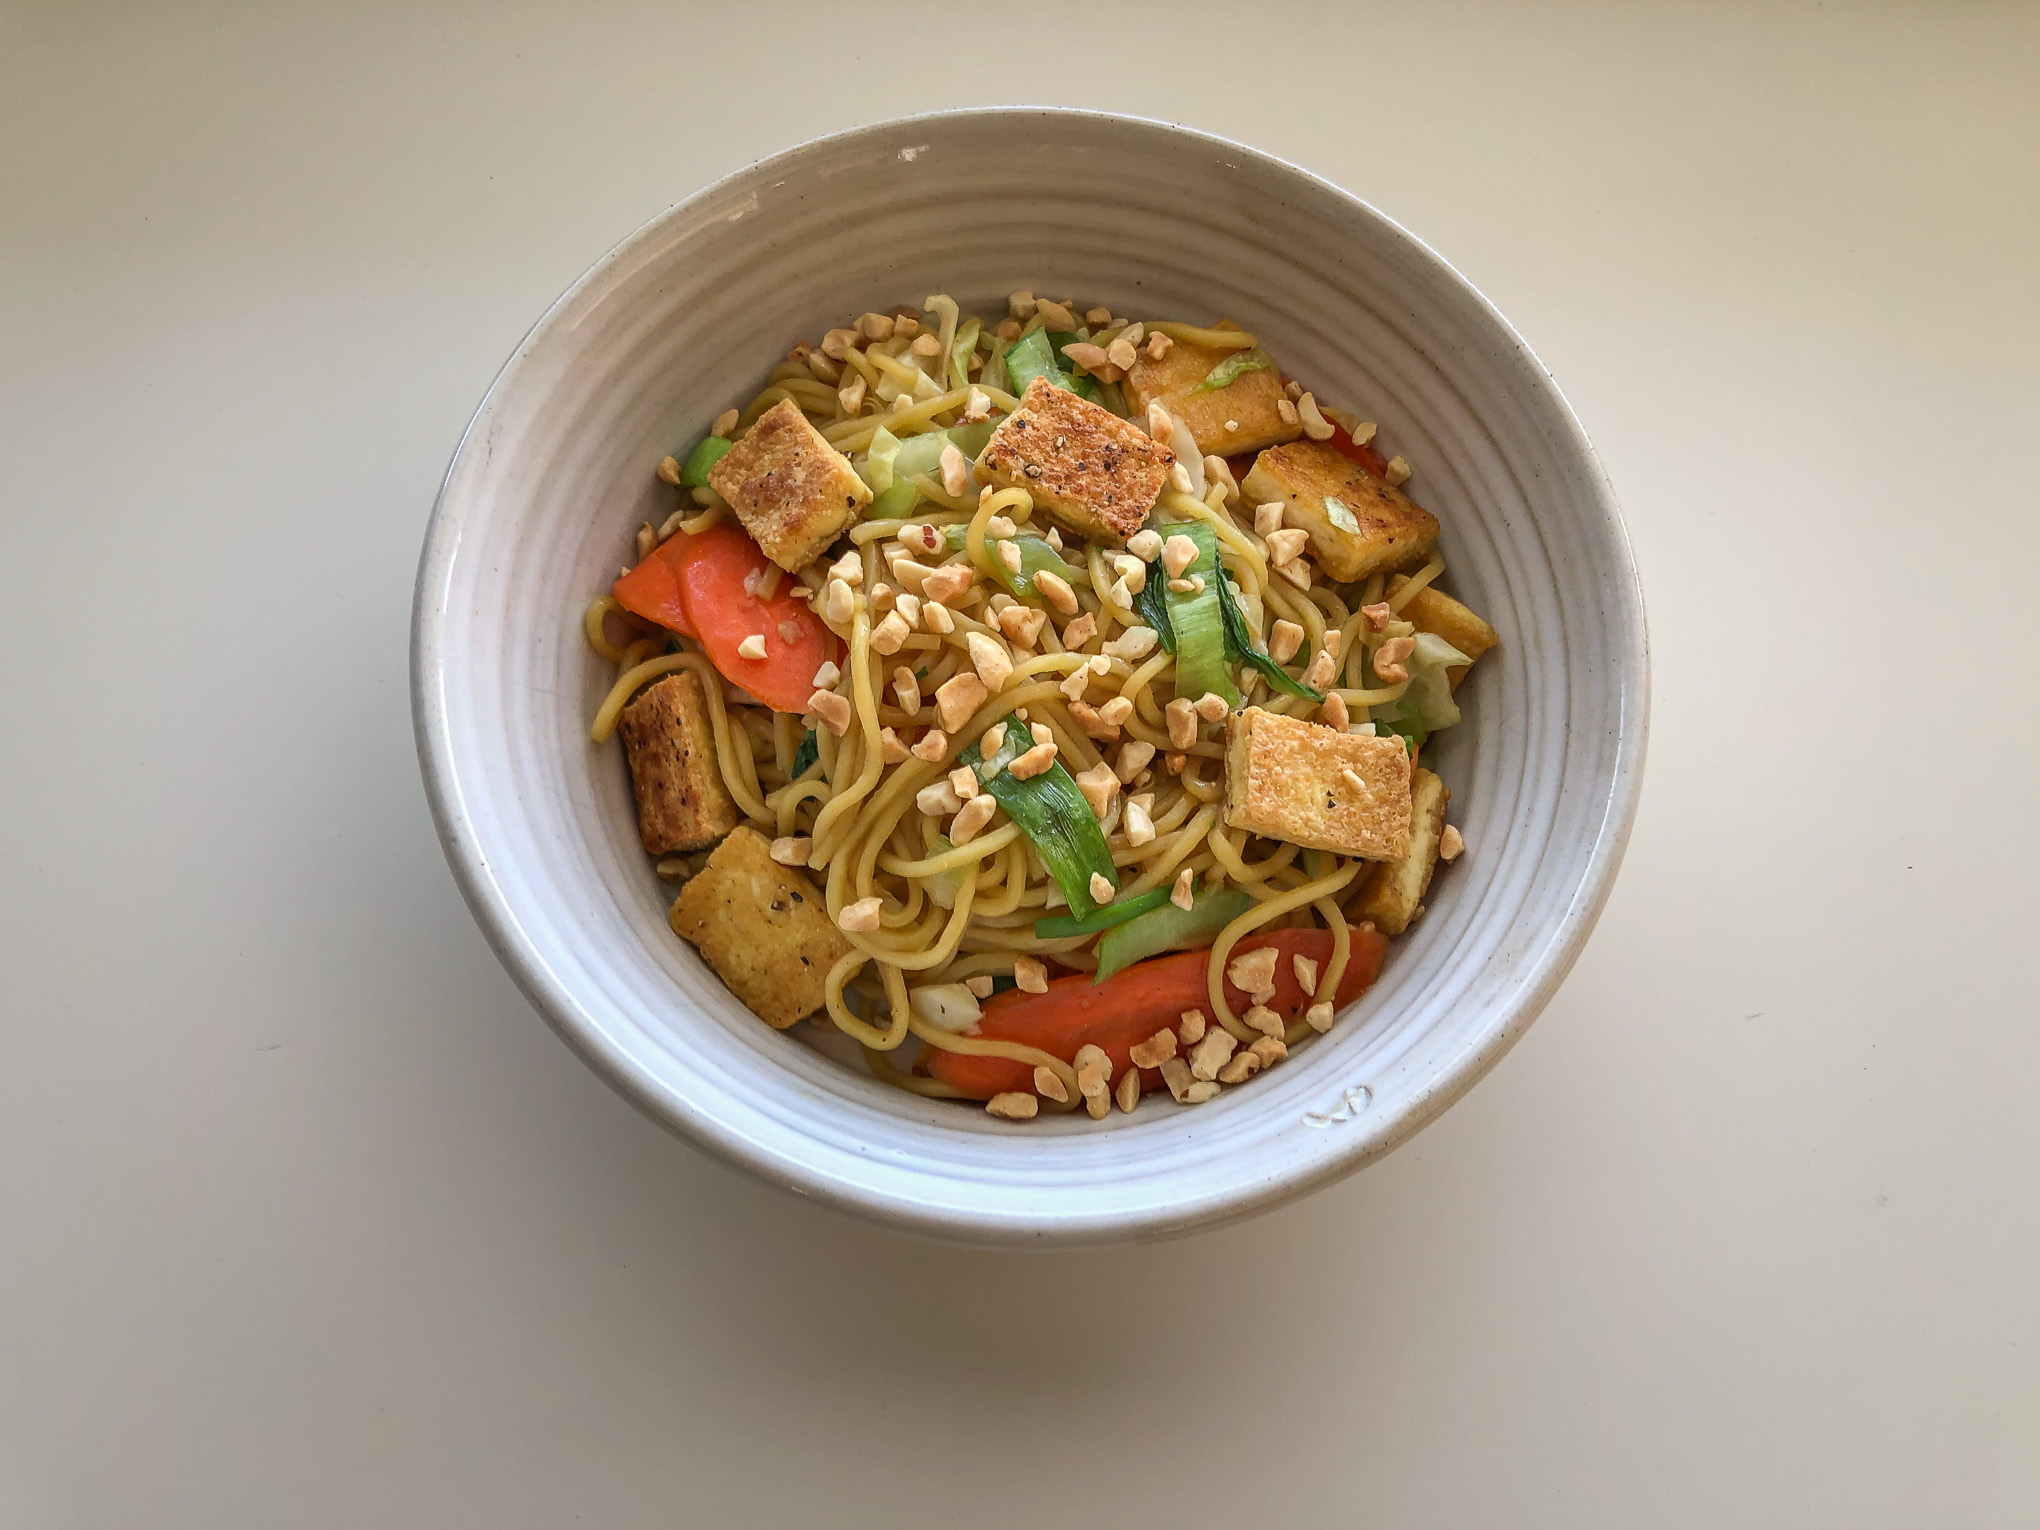 Bowl of yakisoba noodles and veggies